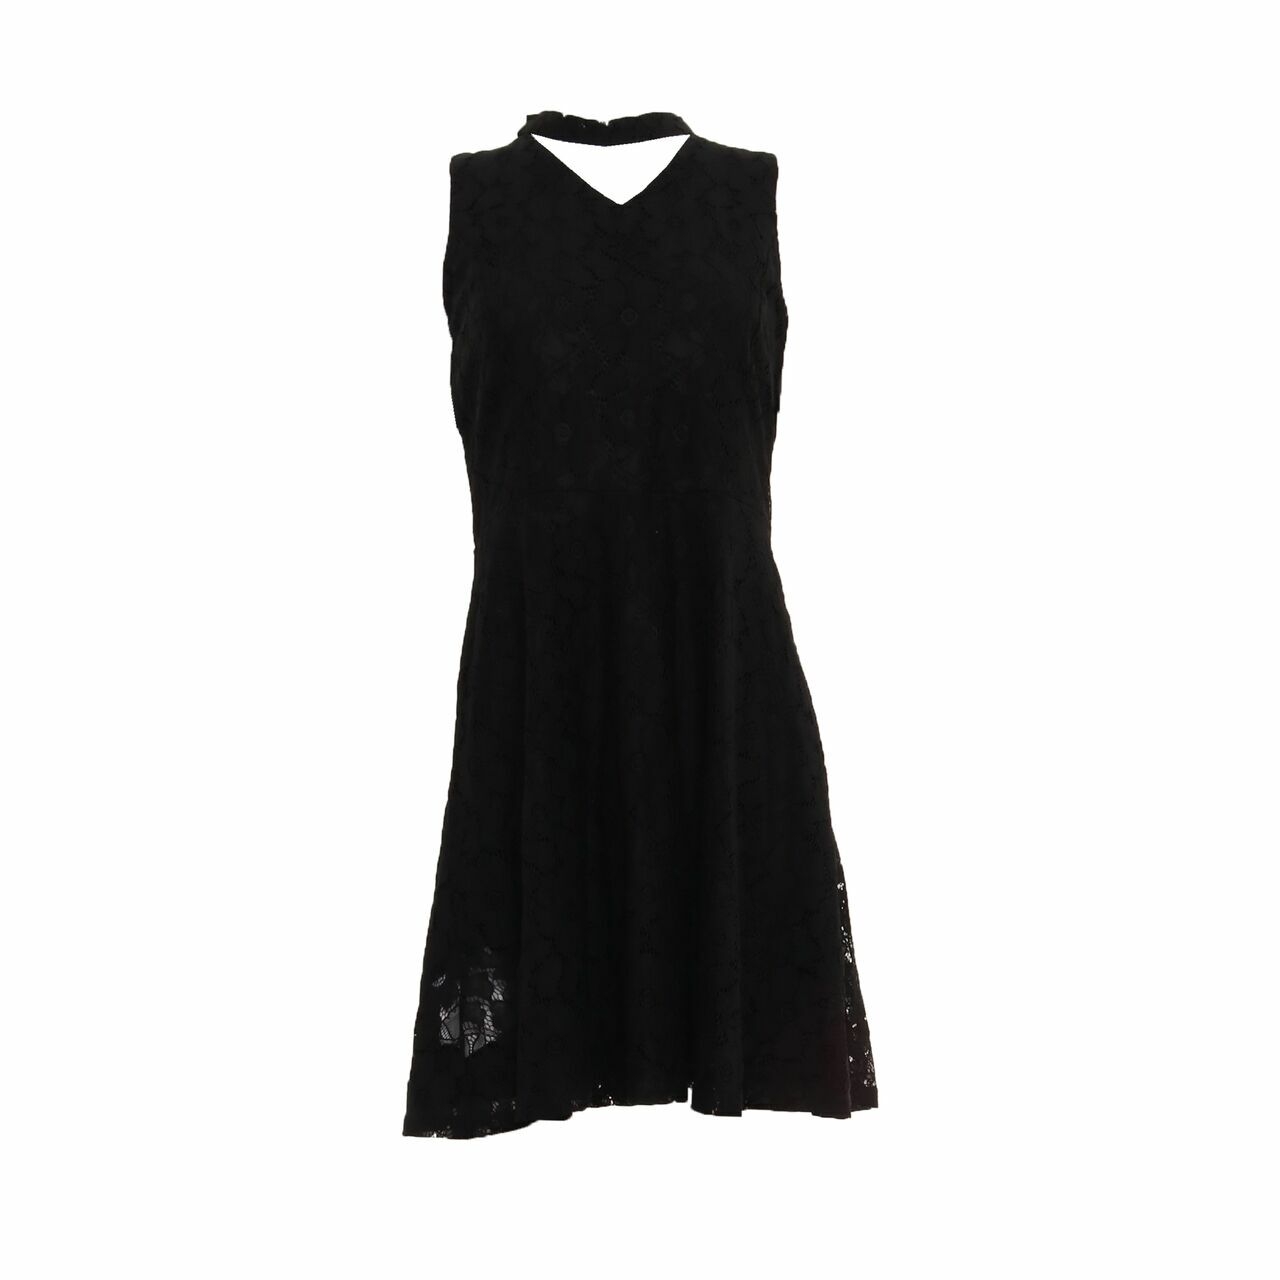 Chic Simple Black Mini Dress